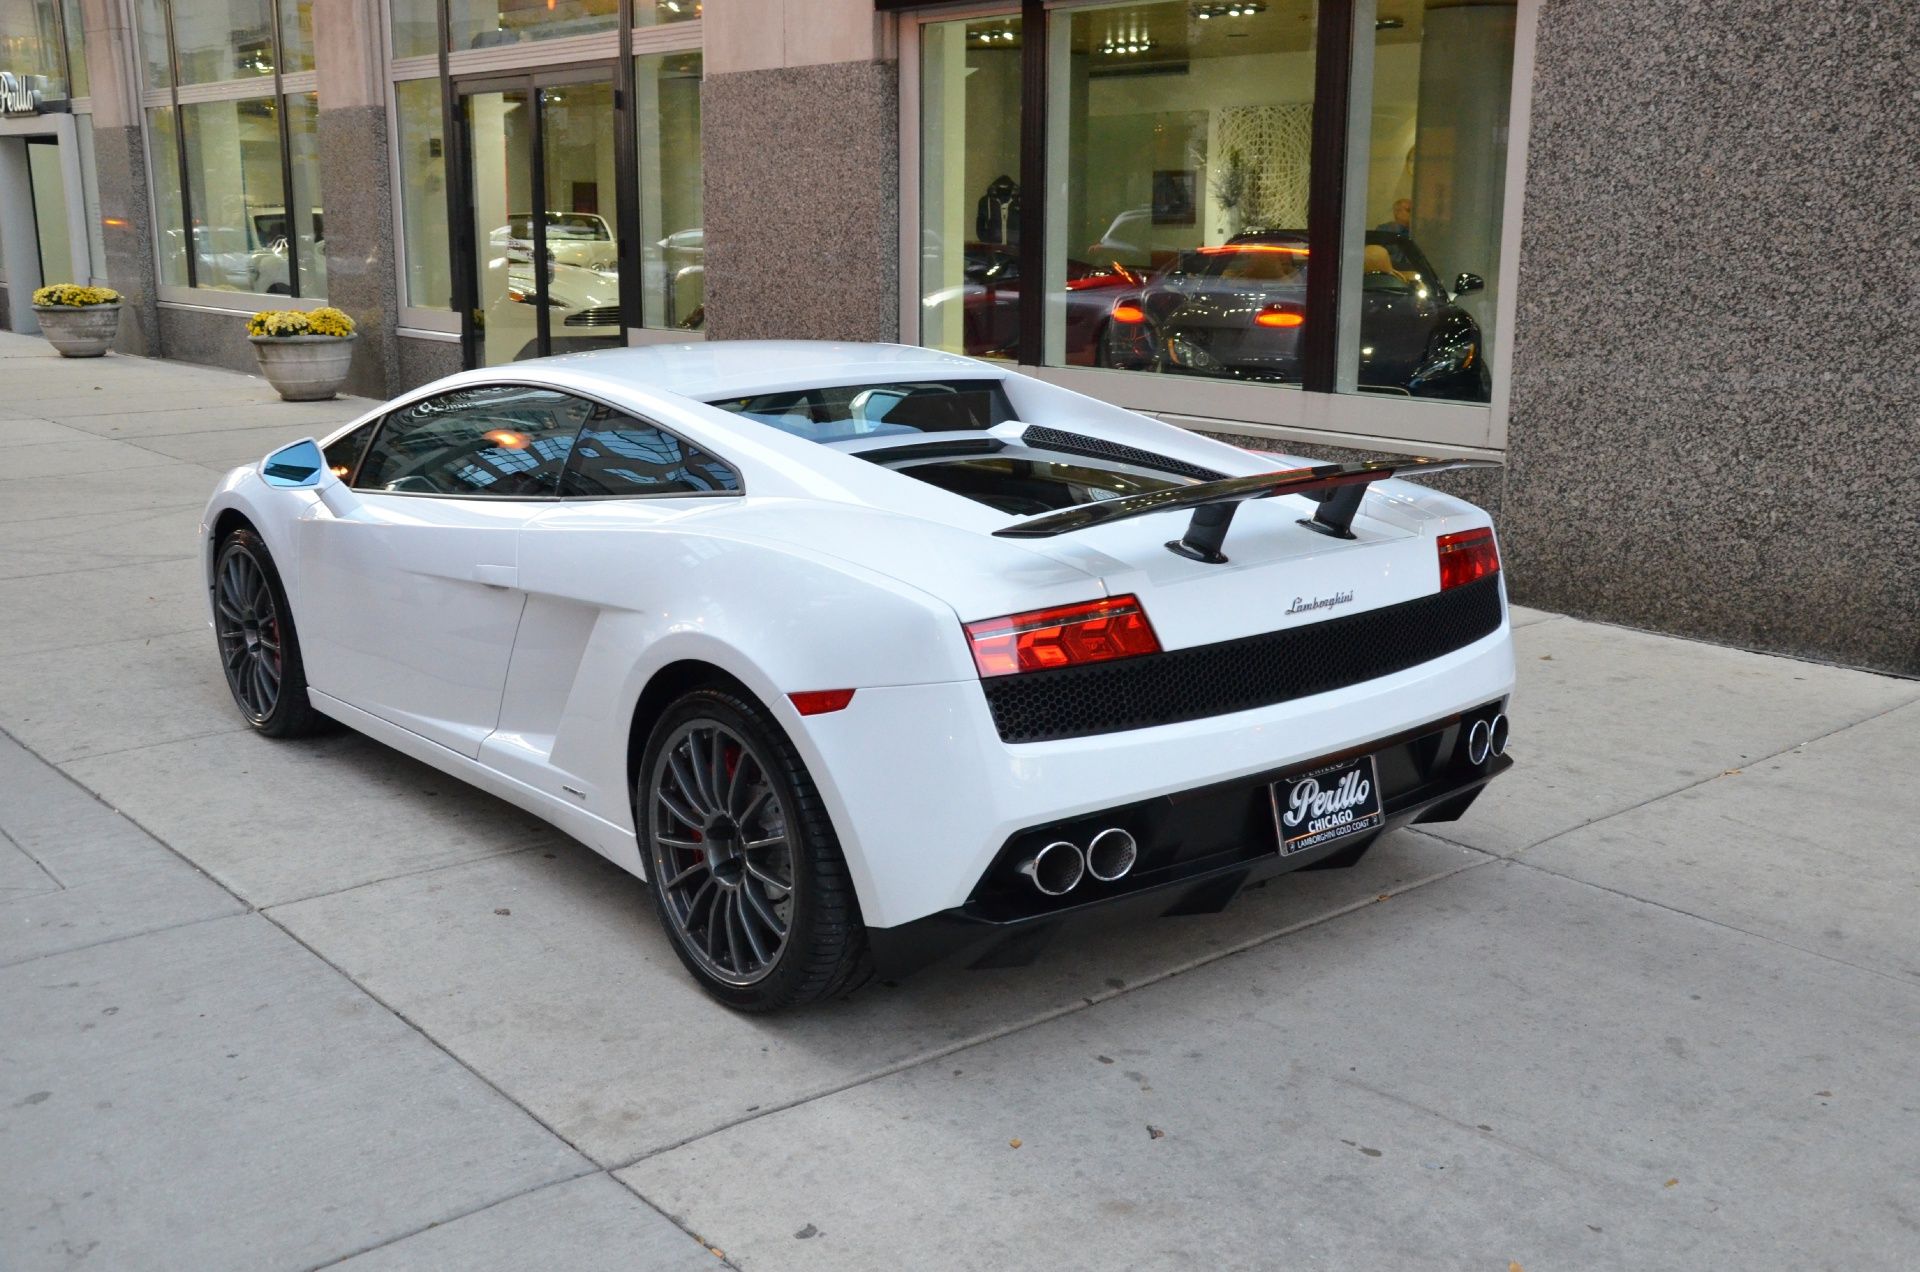 the 2014 Lamborghini Gallardo parked outside a store